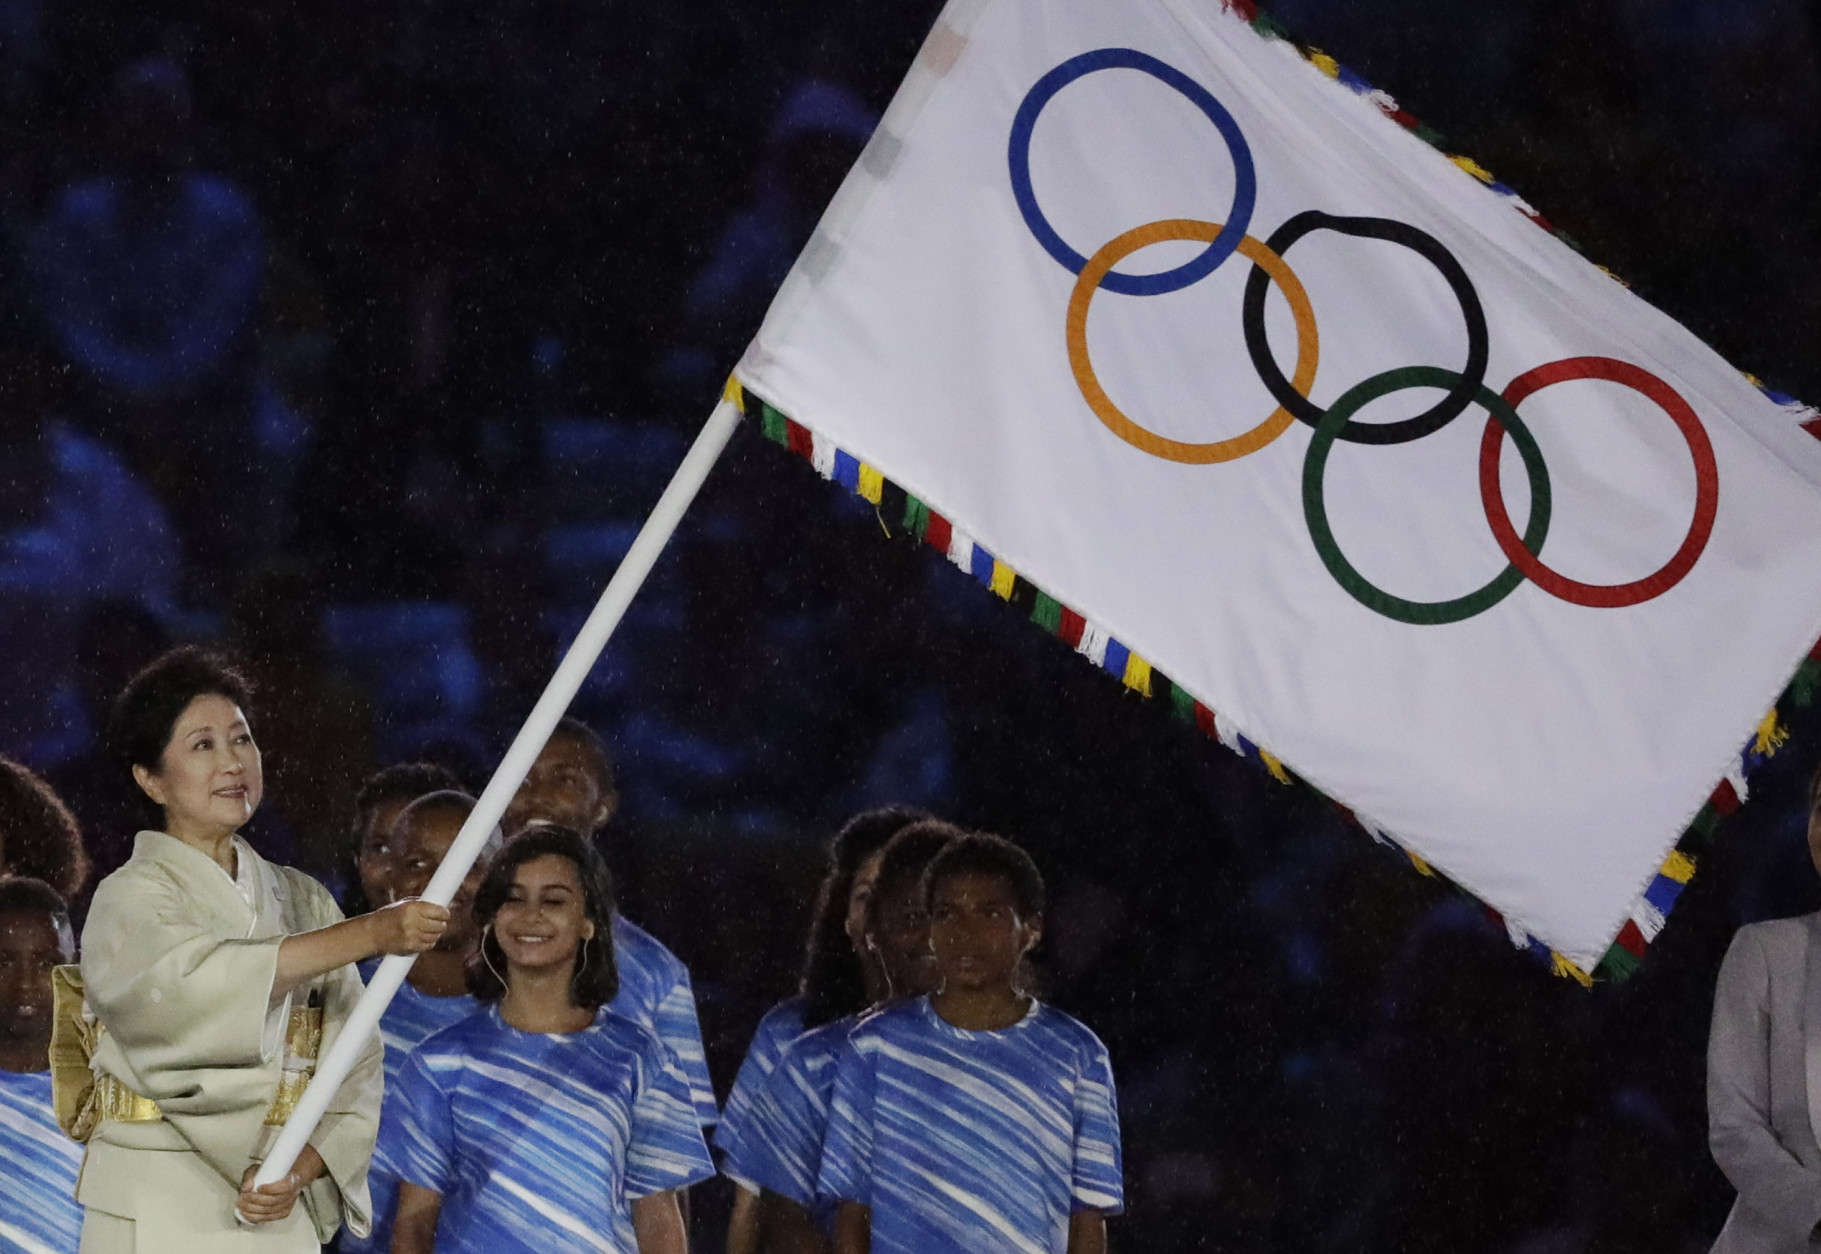 Tokyo governor Yuriko Koike waves the Olympic flag during the closing ceremony in the Maracana stadium at the 2016 Summer Olympics in Rio de Janeiro, Brazil, Sunday, Aug. 21, 2016. (AP Photo/Matt Dunham)